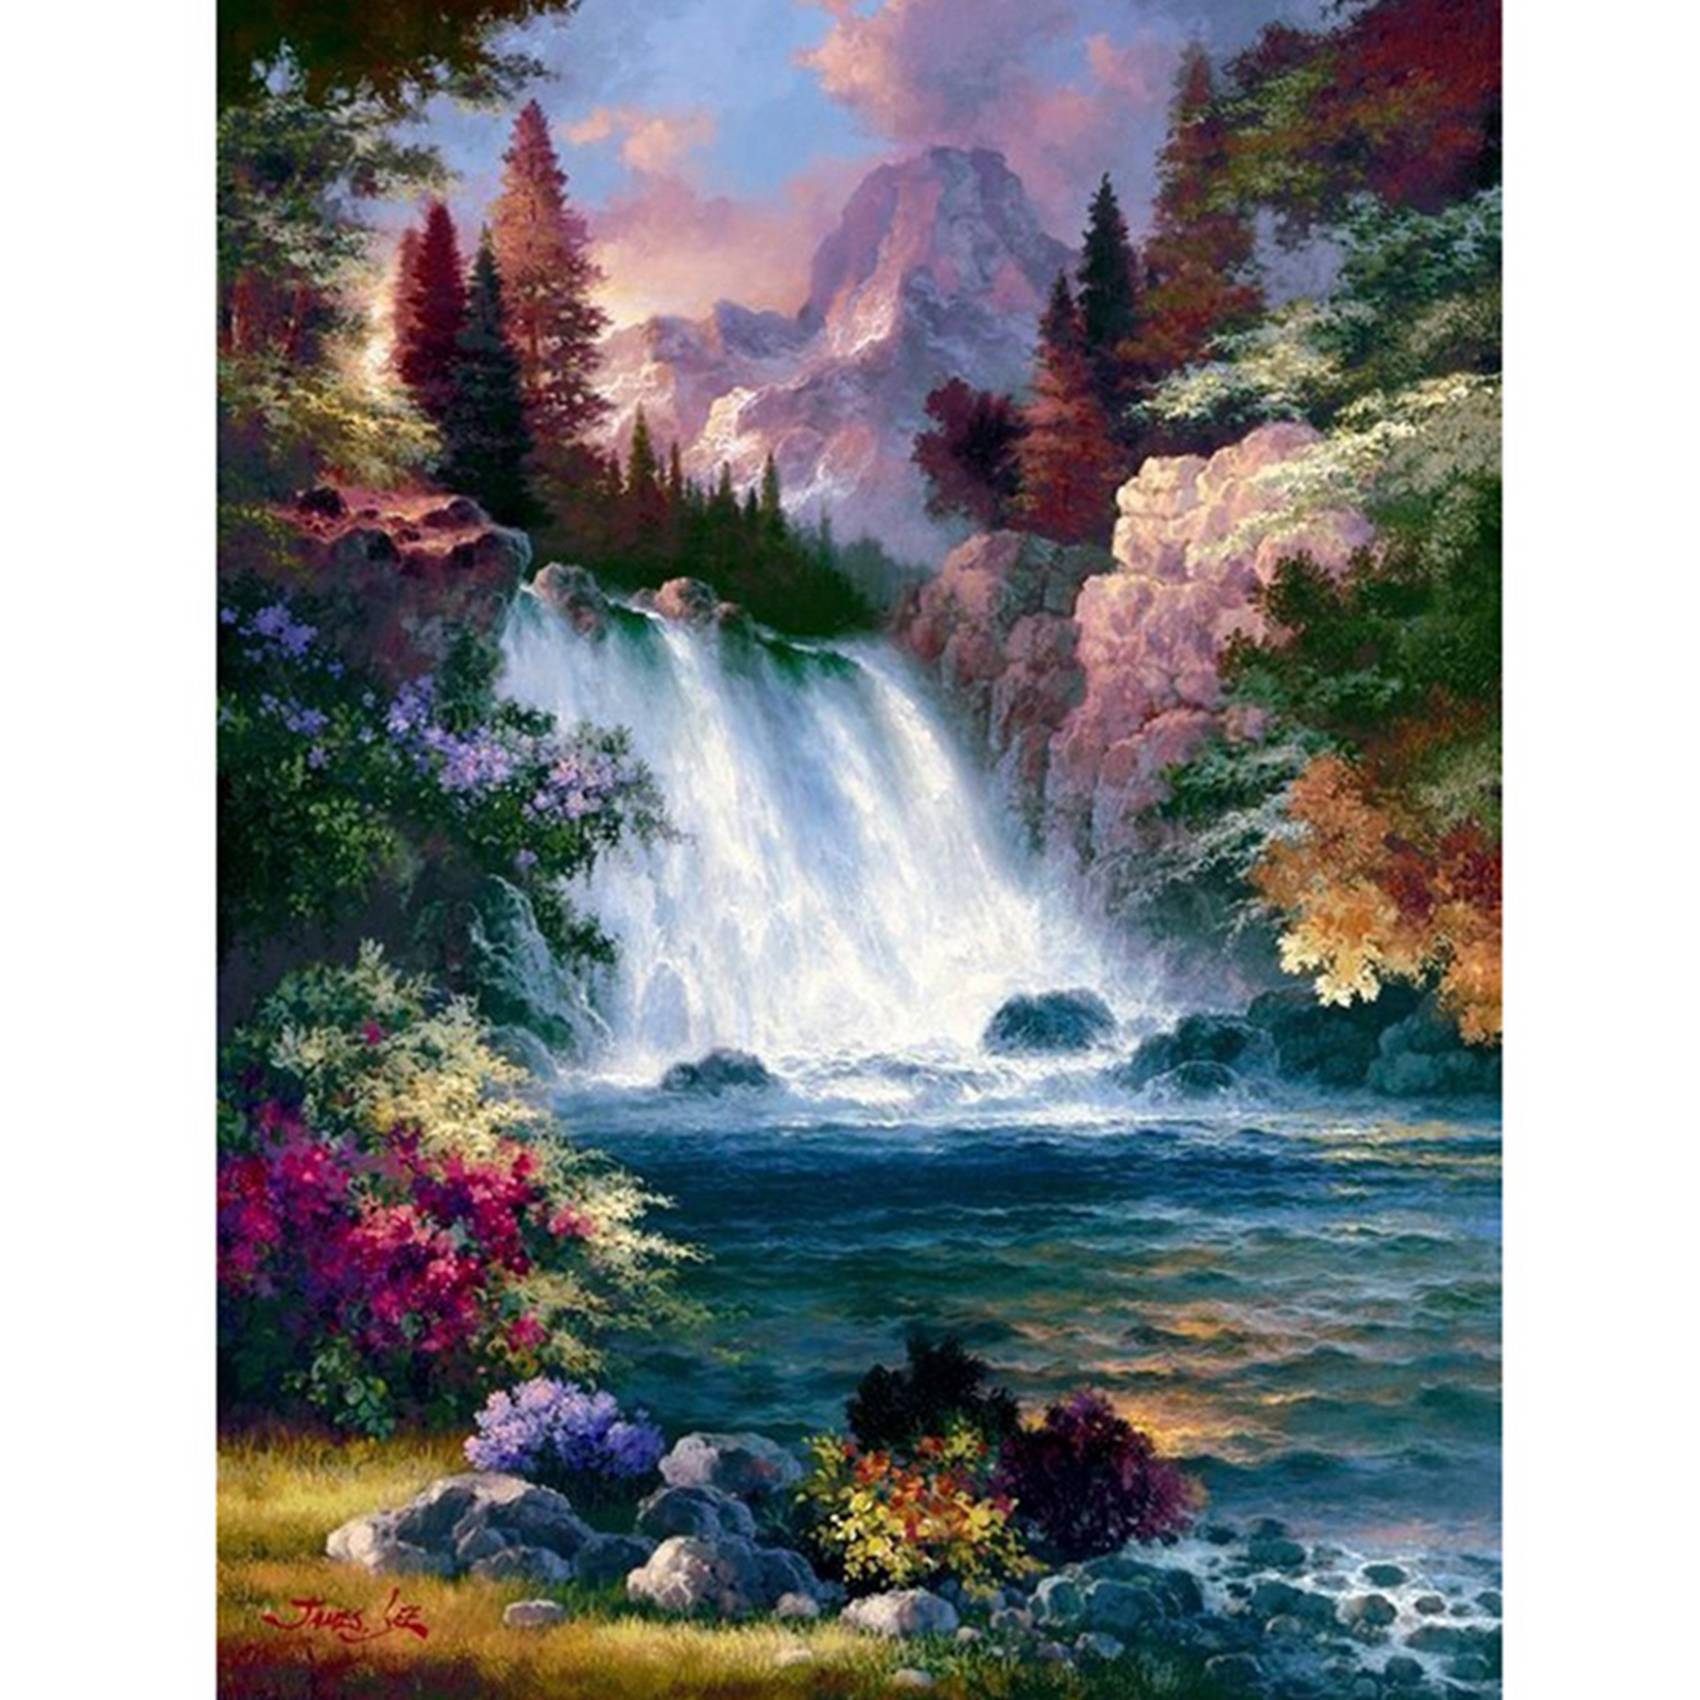 James Lee картины пейзаж водопад